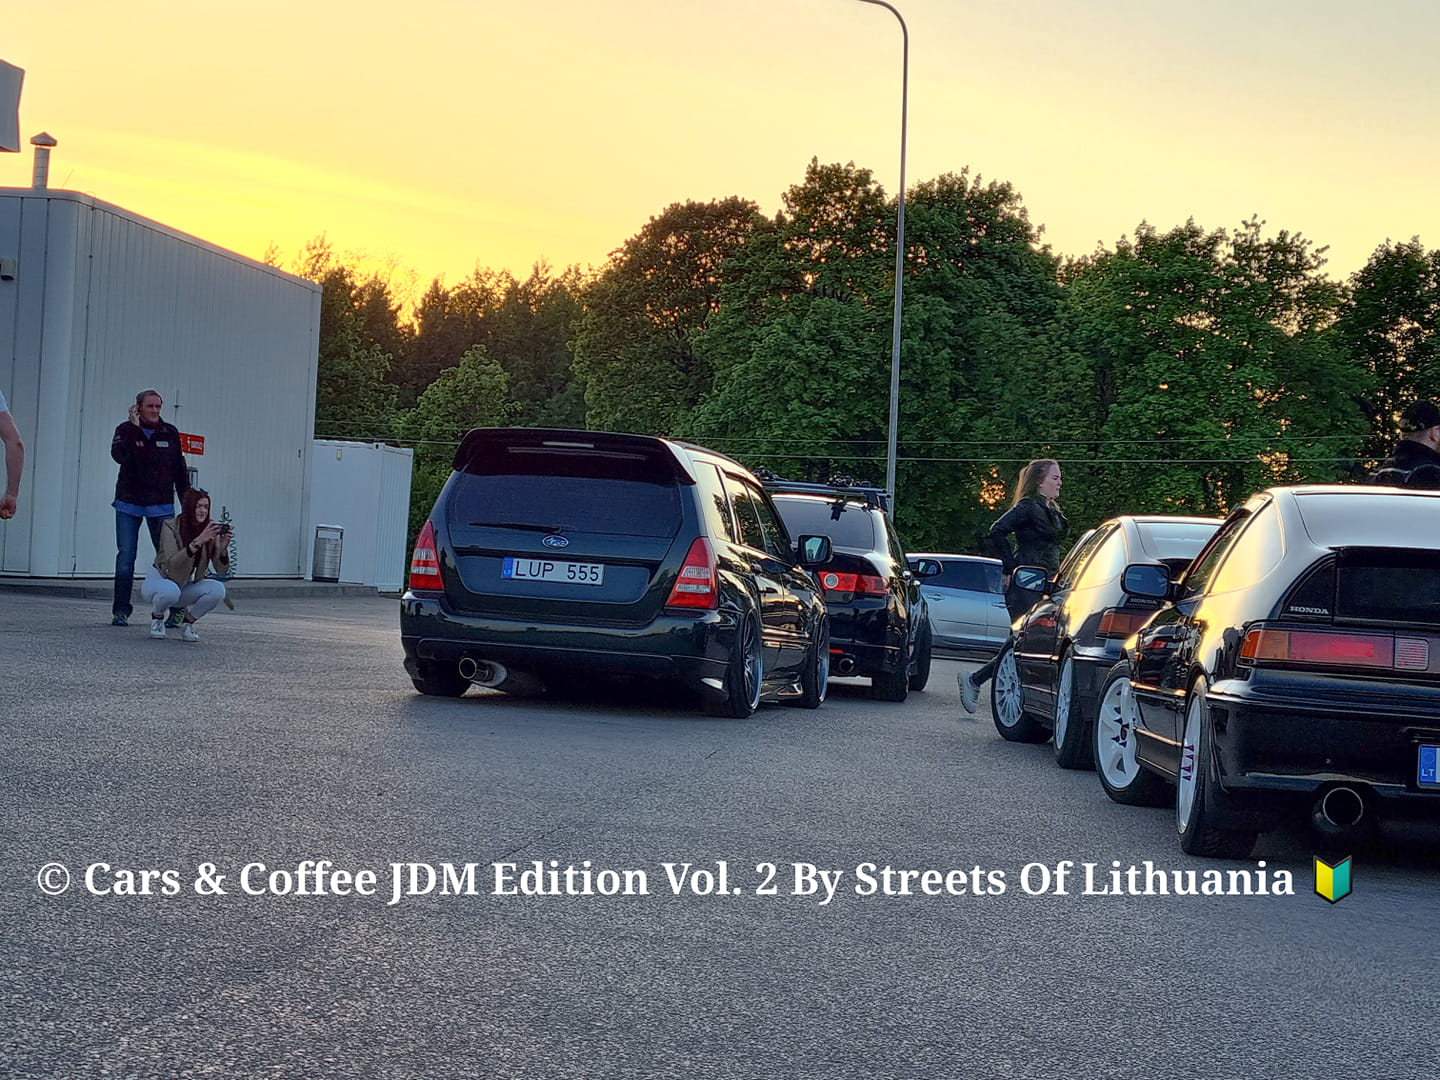 Cars N' Coffee JDM Edition Vol. 2